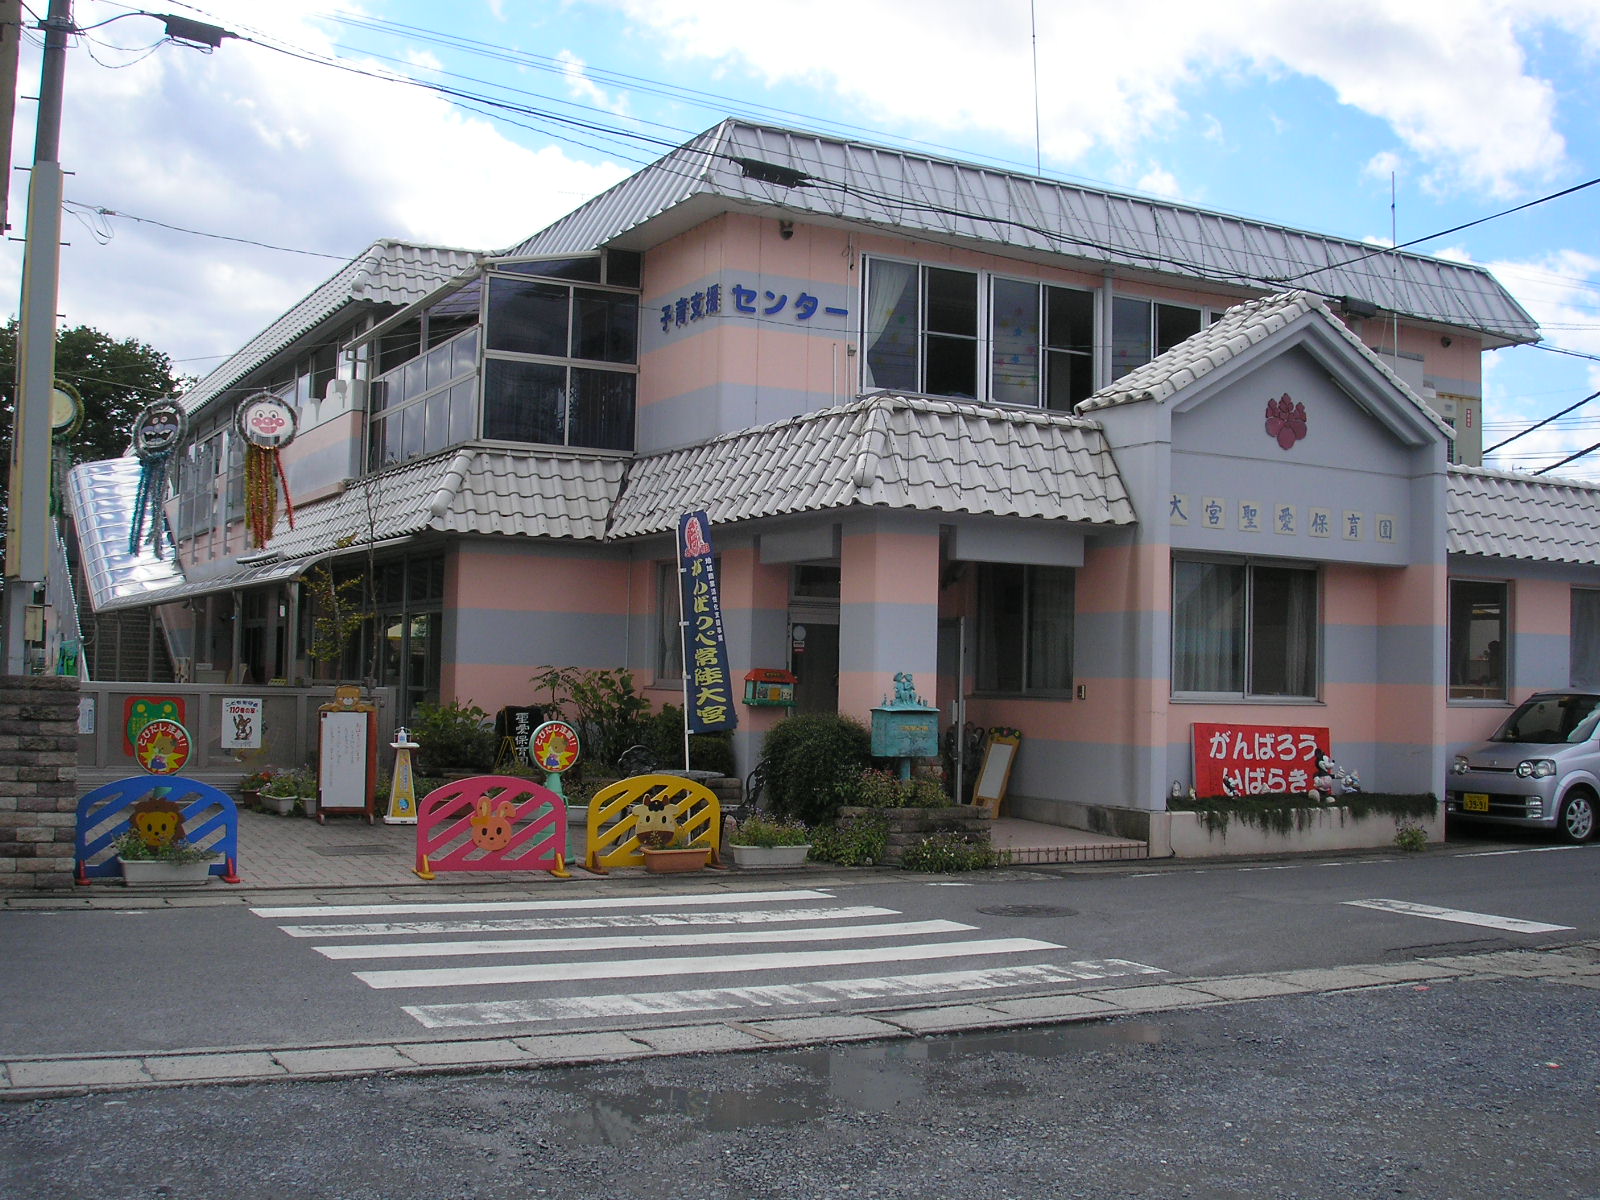 kindergarten ・ Nursery. Omiya HijiriAi nursery school (kindergarten ・ 223m to the nursery)